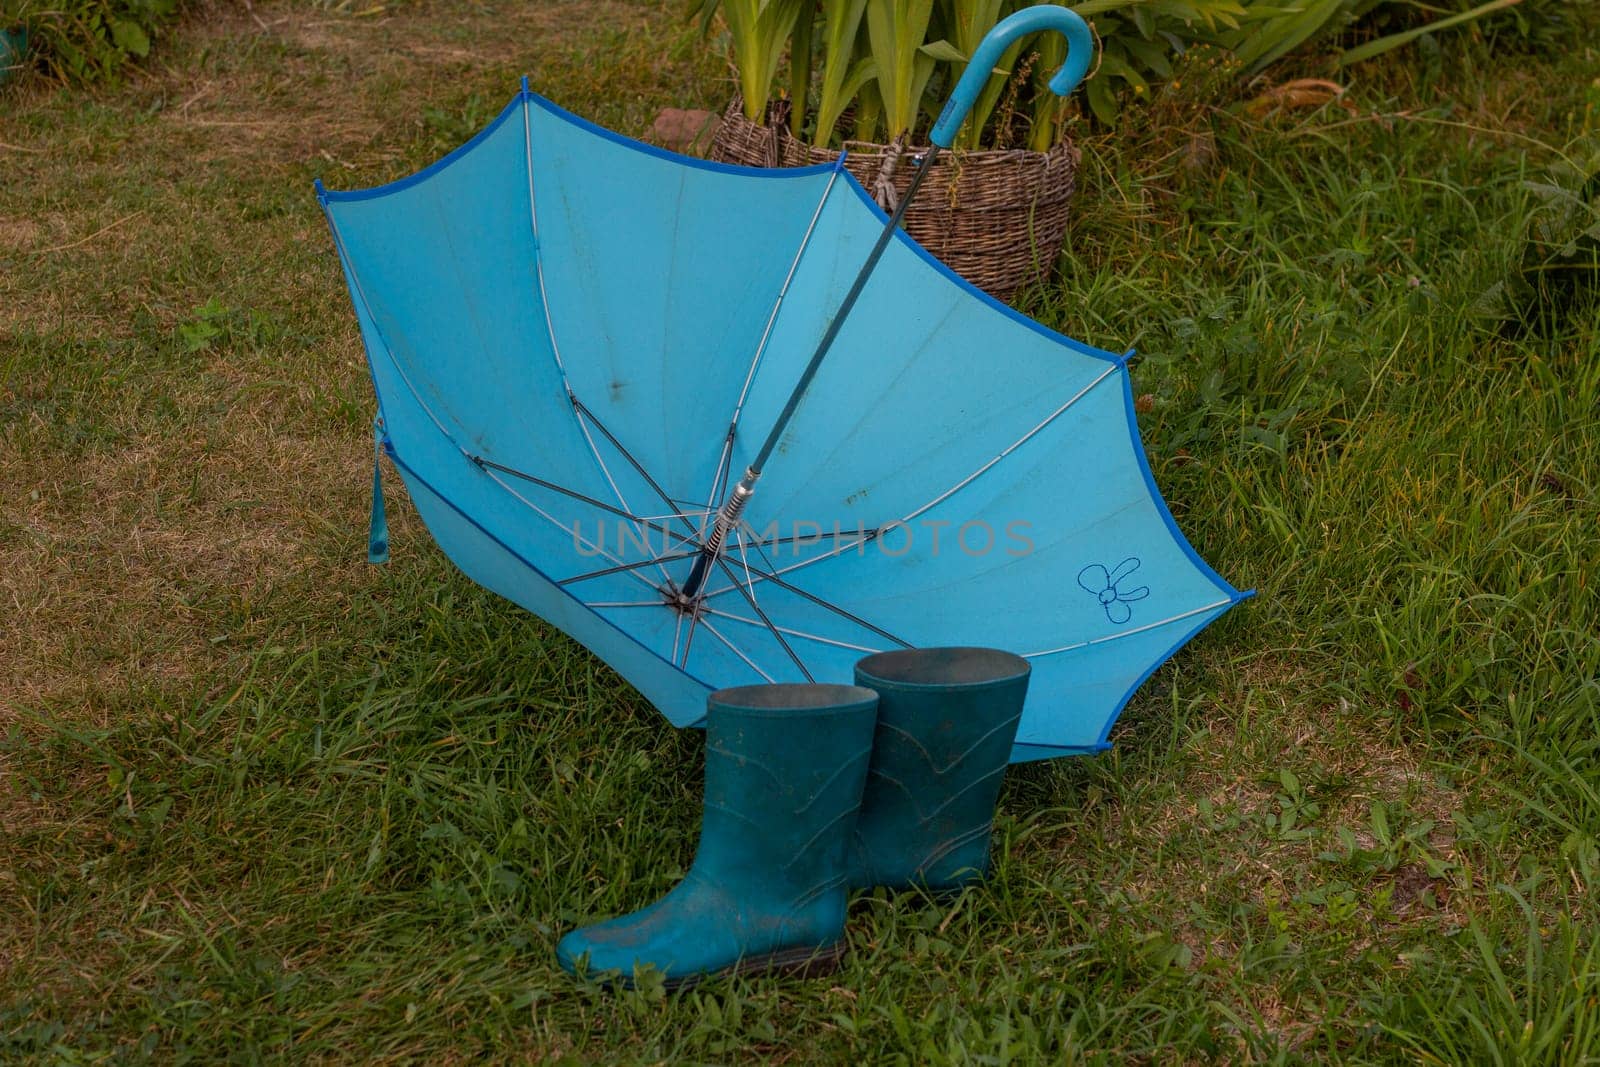 Blue rubber boots blue umbrella lies awn. by electrovenik